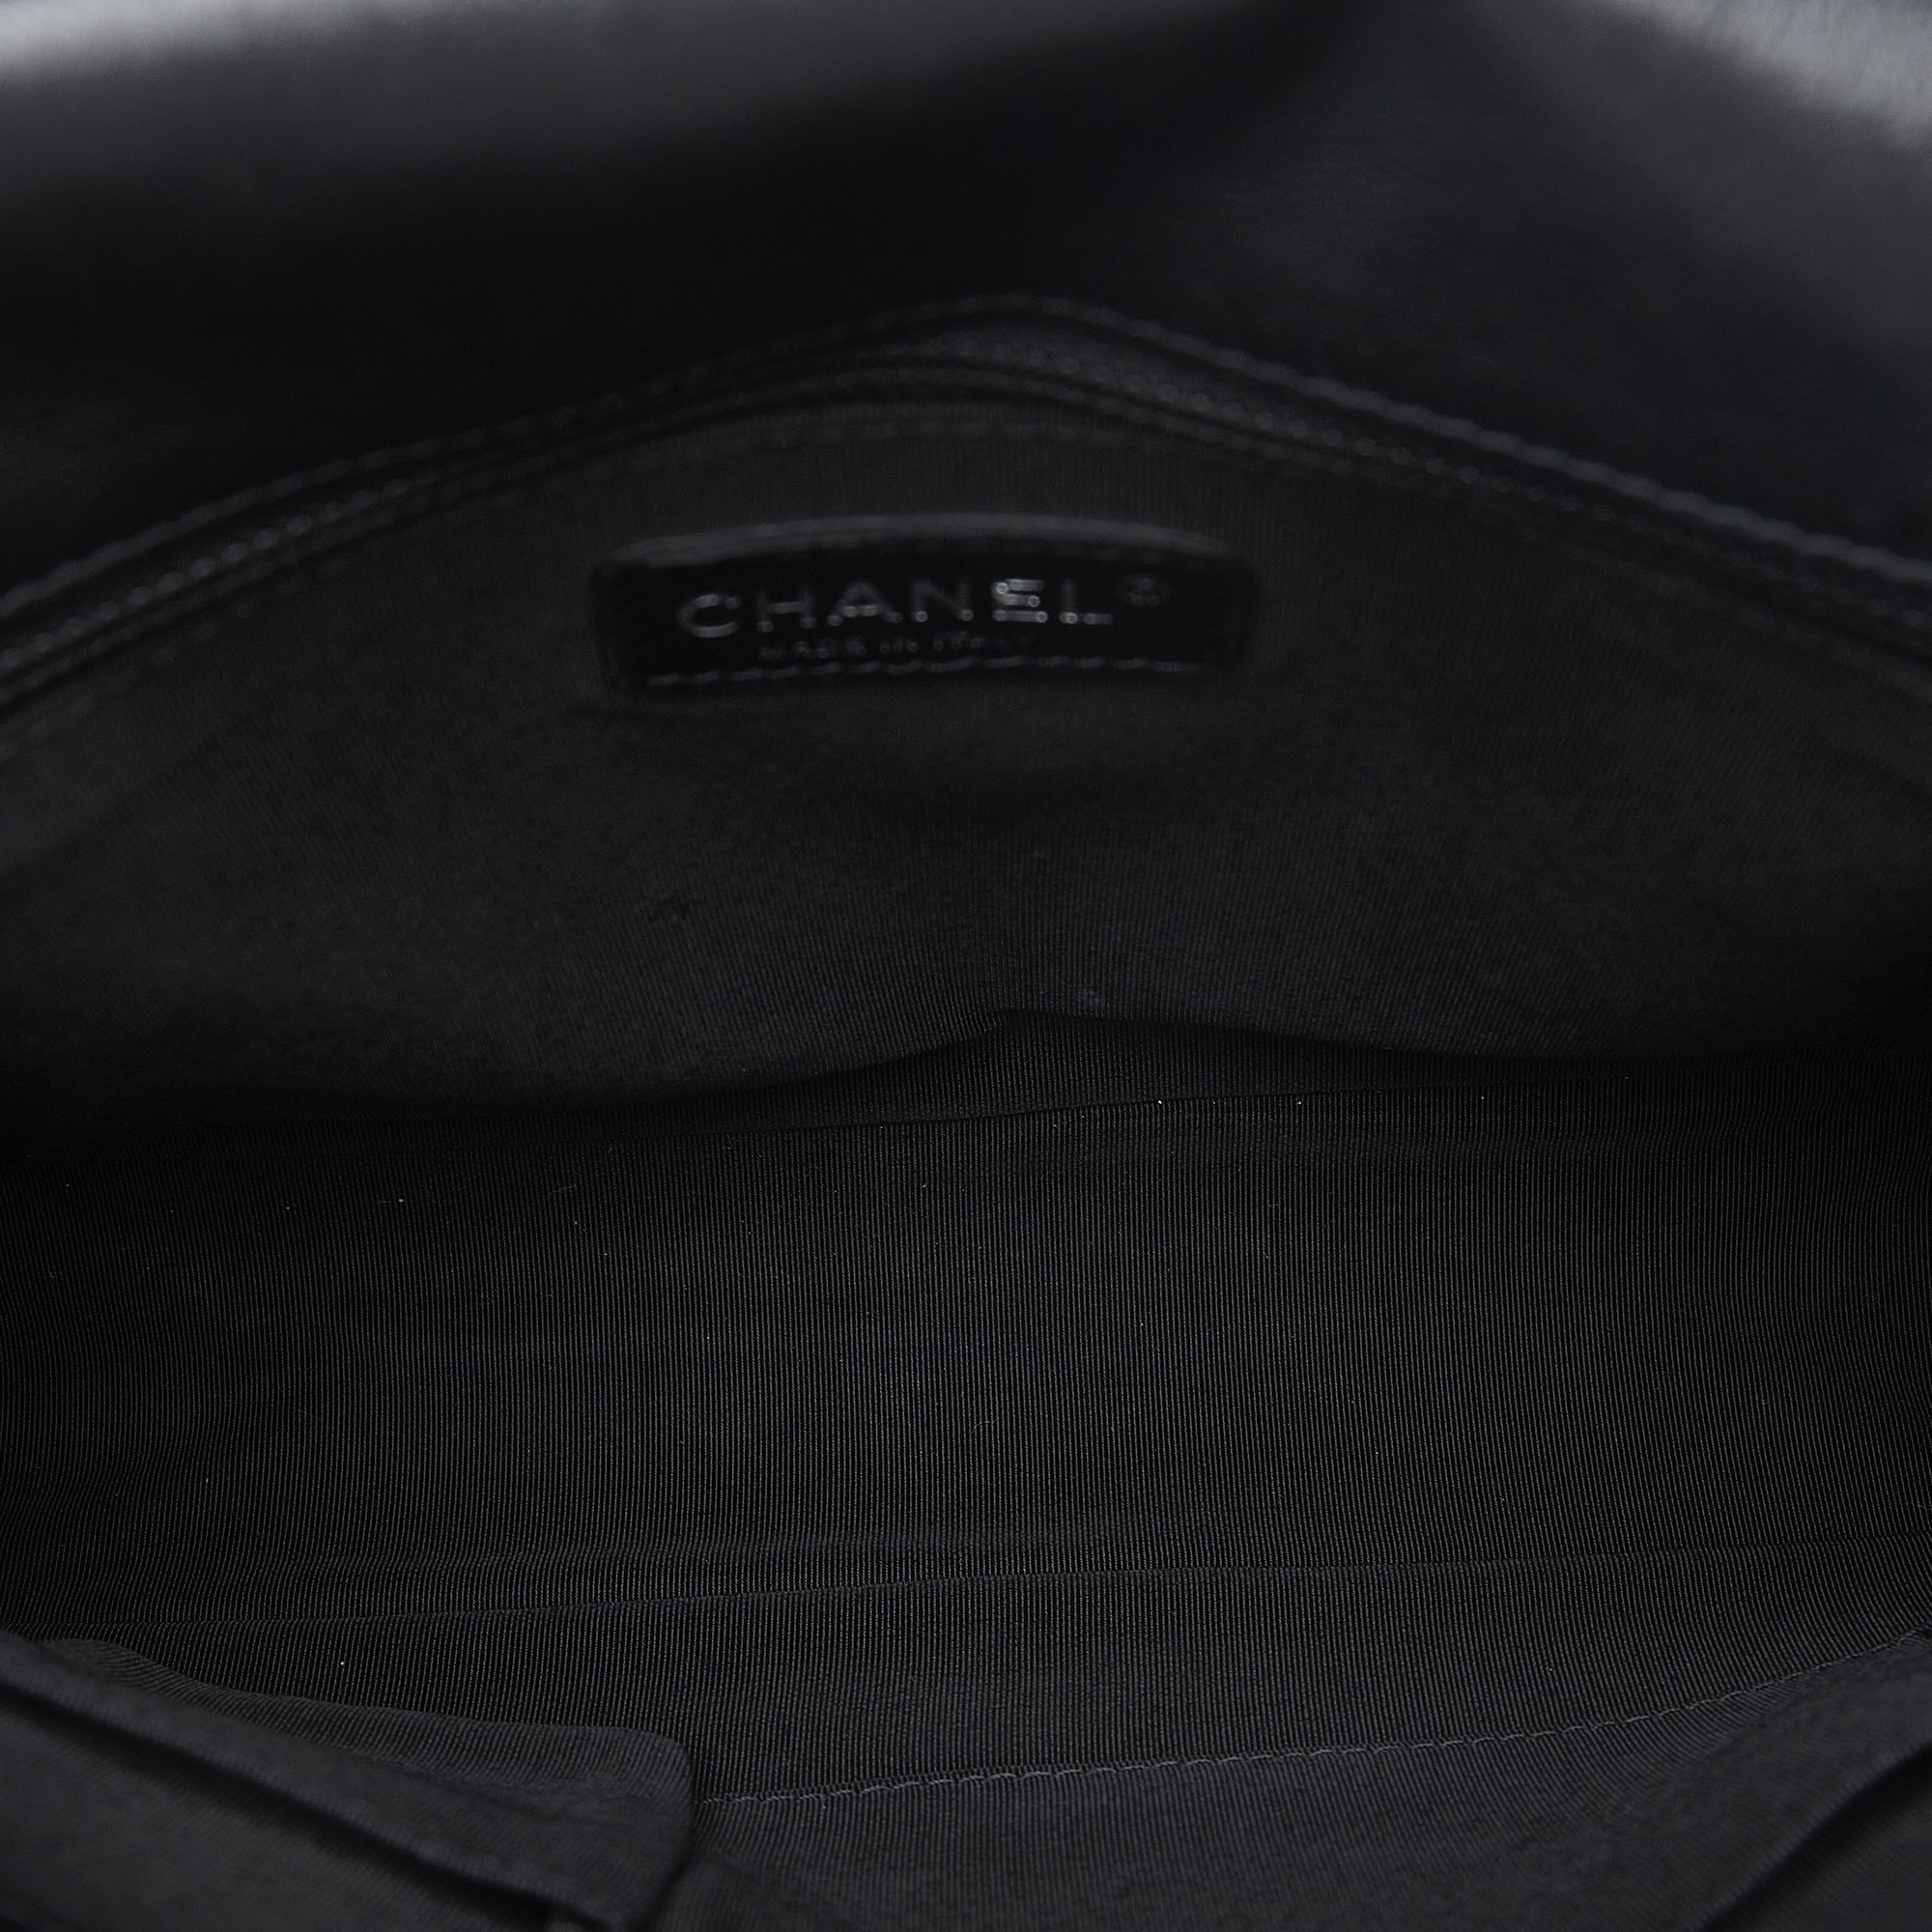 Chanel Black Large Lambskin Boy Bag